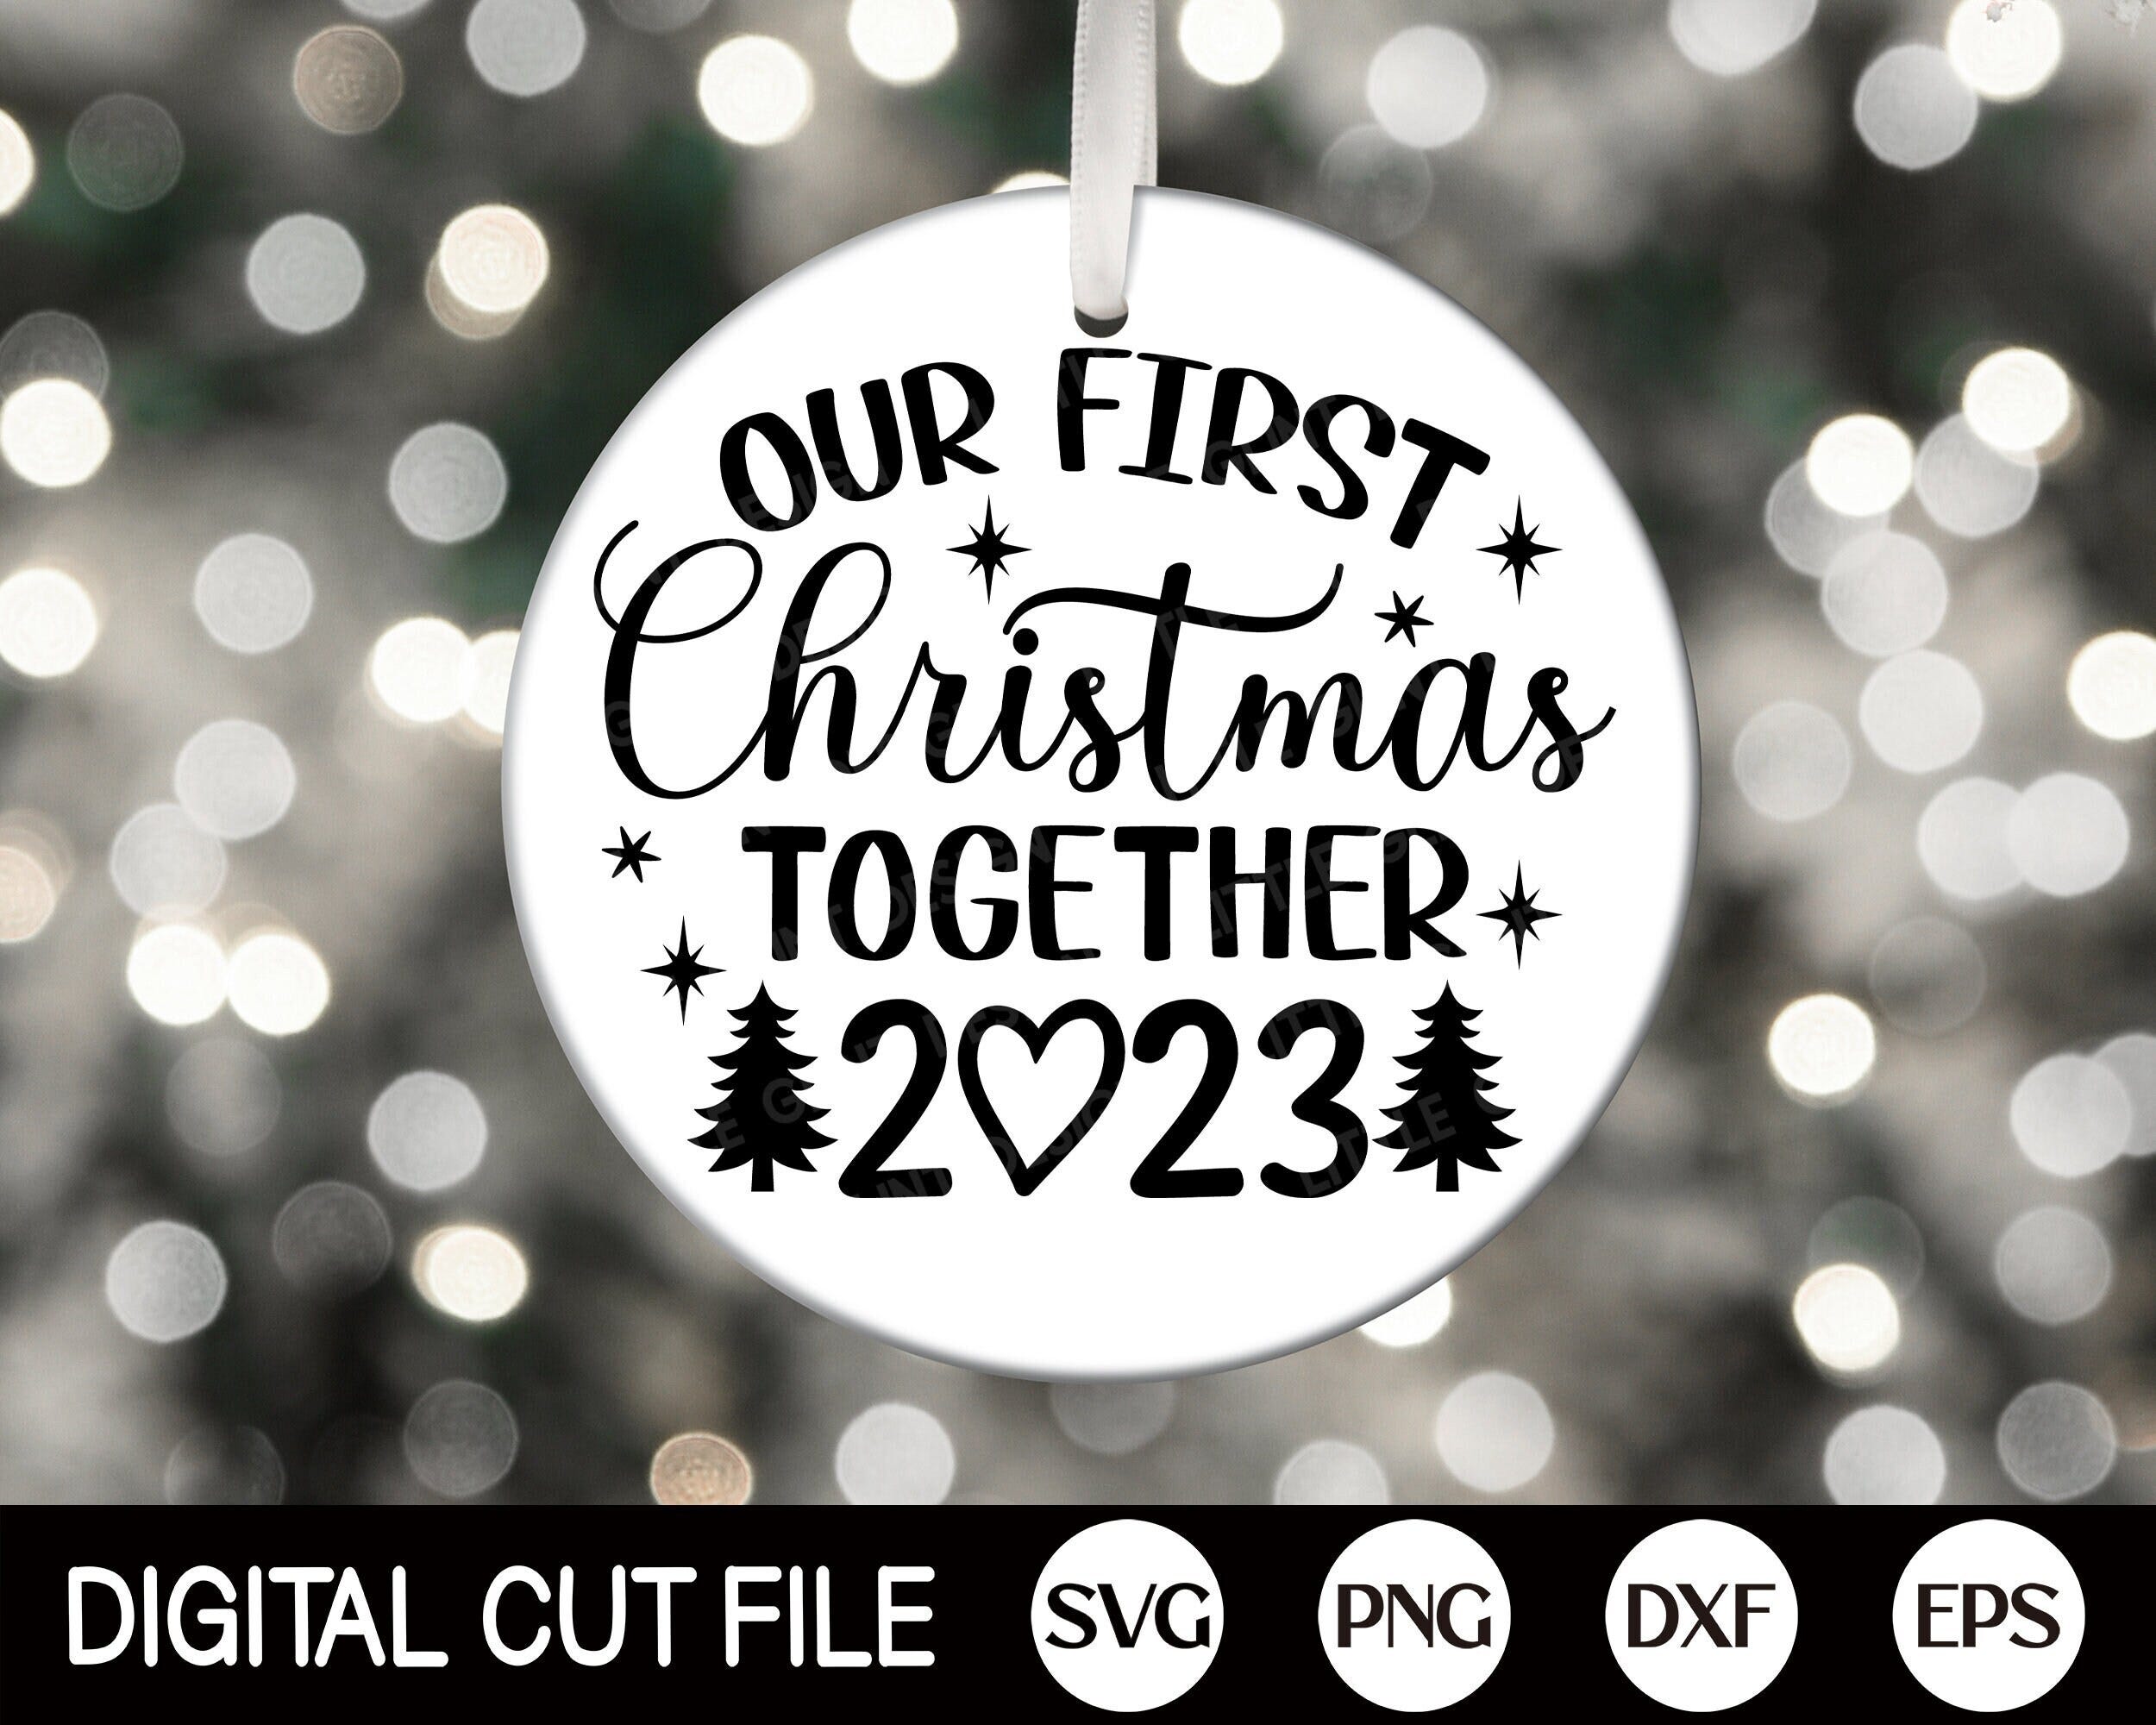 Our first Christmas Together 2023 SVG, Christmas Ornament SVG, Christmas Married Shirt, Couples Christmas Gift, Svg Files for Cricut